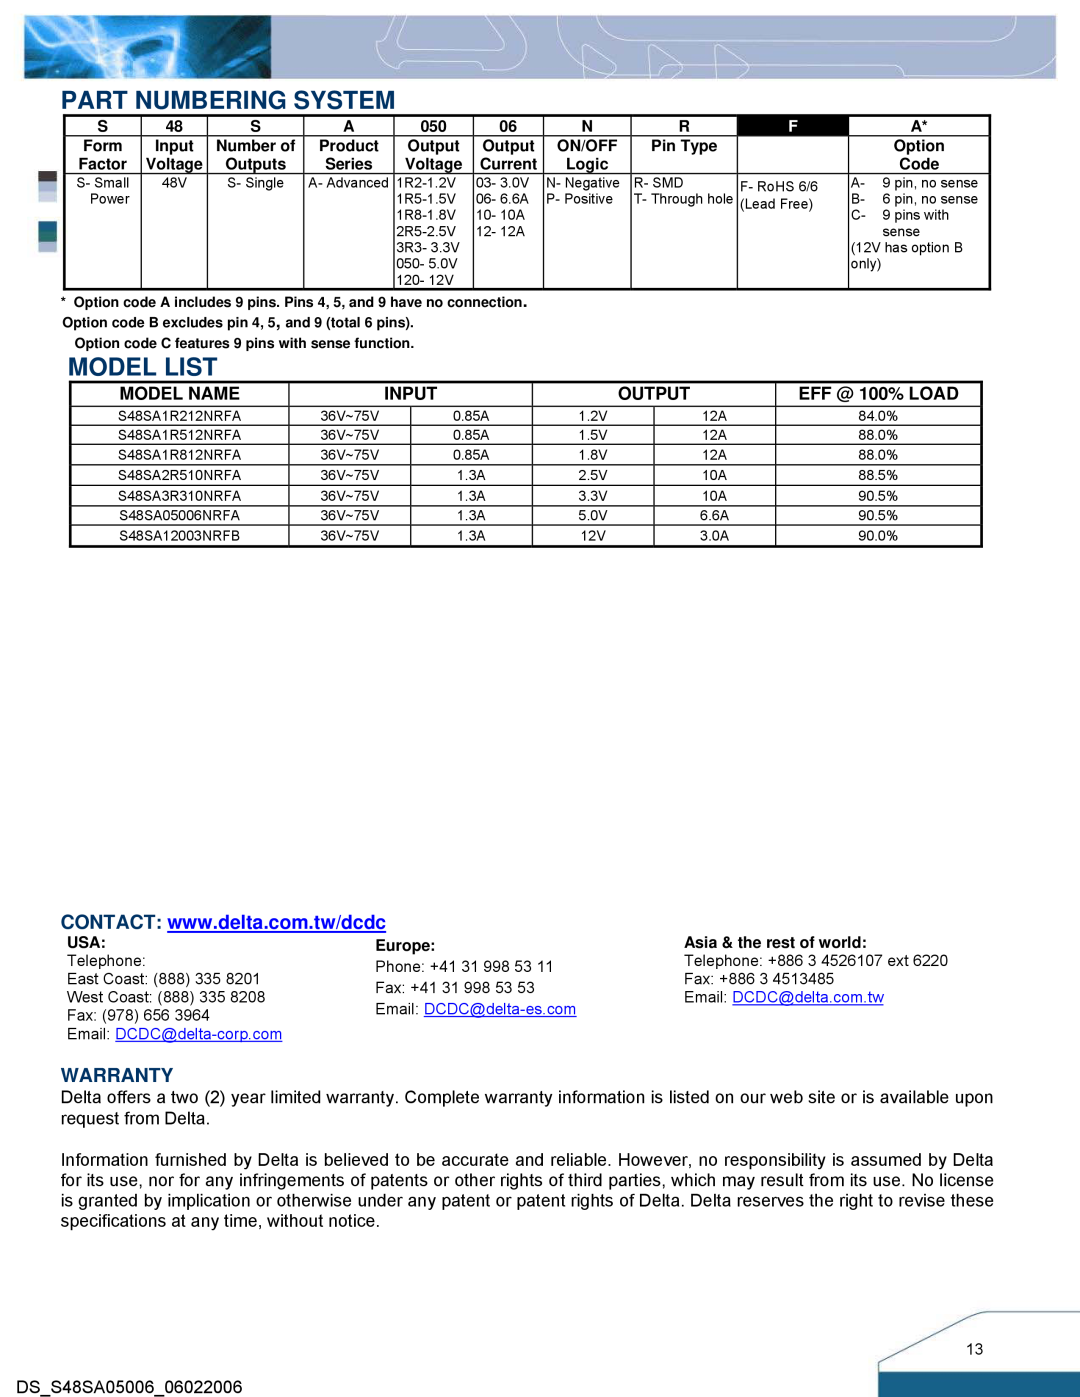 Delta Electronics S48SA manual Part Numbering System, Model List, Warranty, Model Name, Input, Output, EFF @ 100% LOAD 